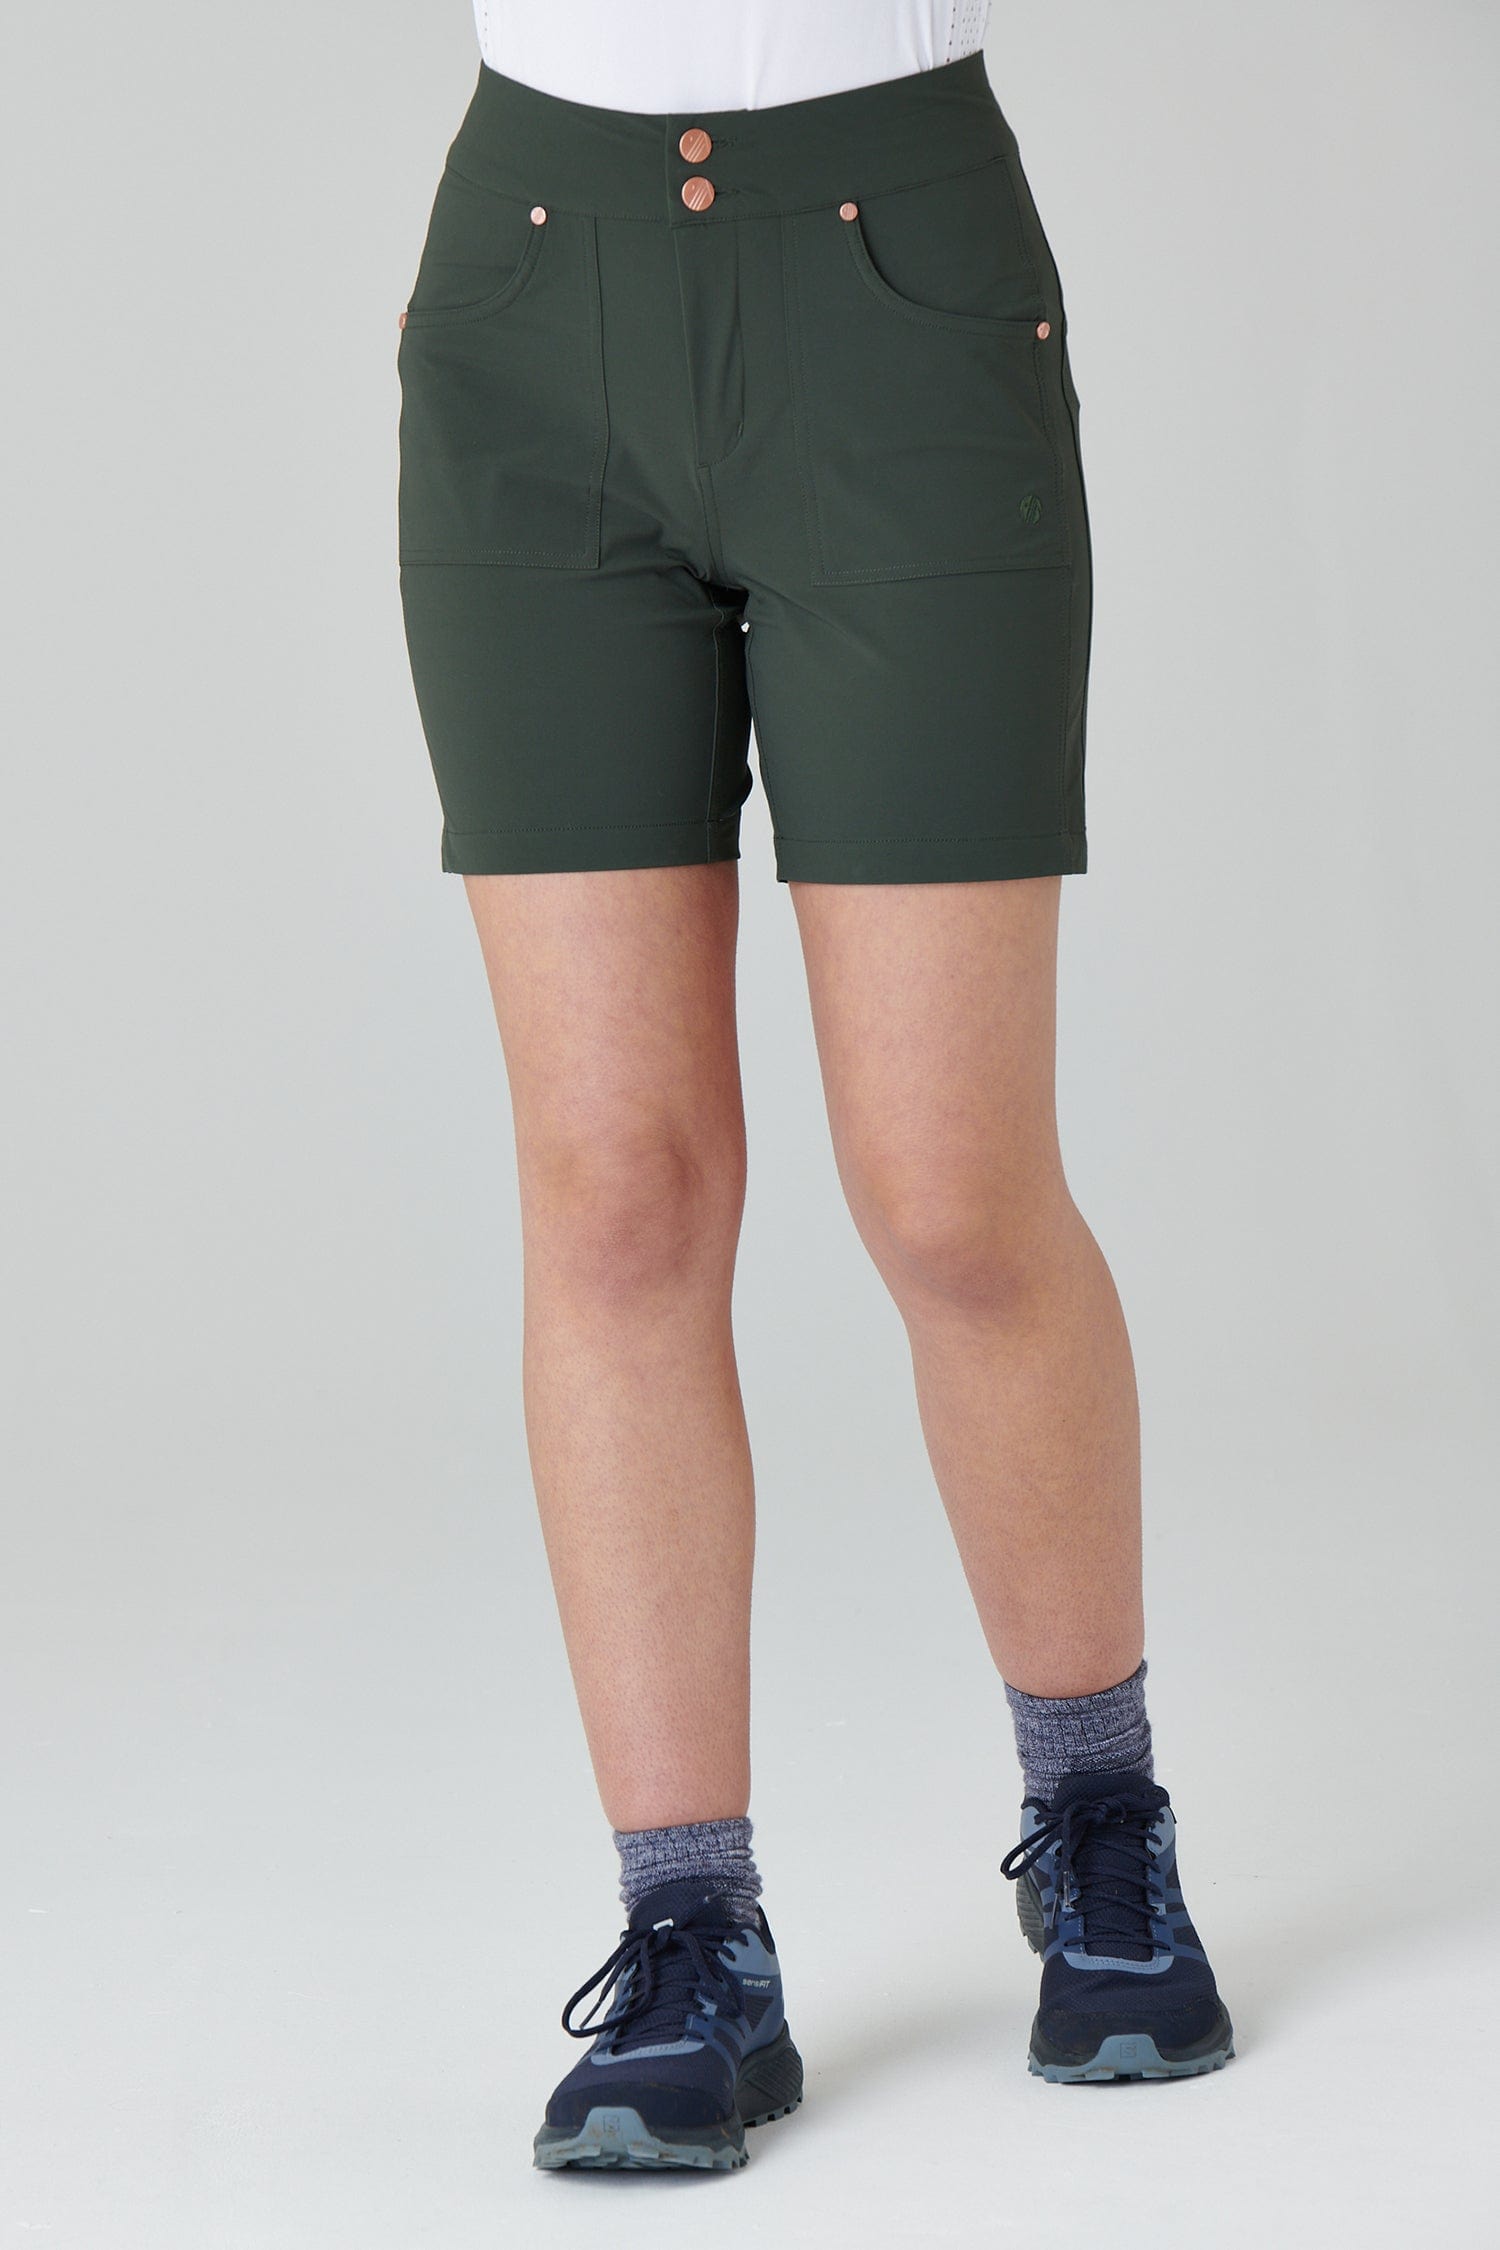 Mid Length Trek Shorts - Deep Khaki - 28 / Uk10 - Womens - Acai Outdoorwear